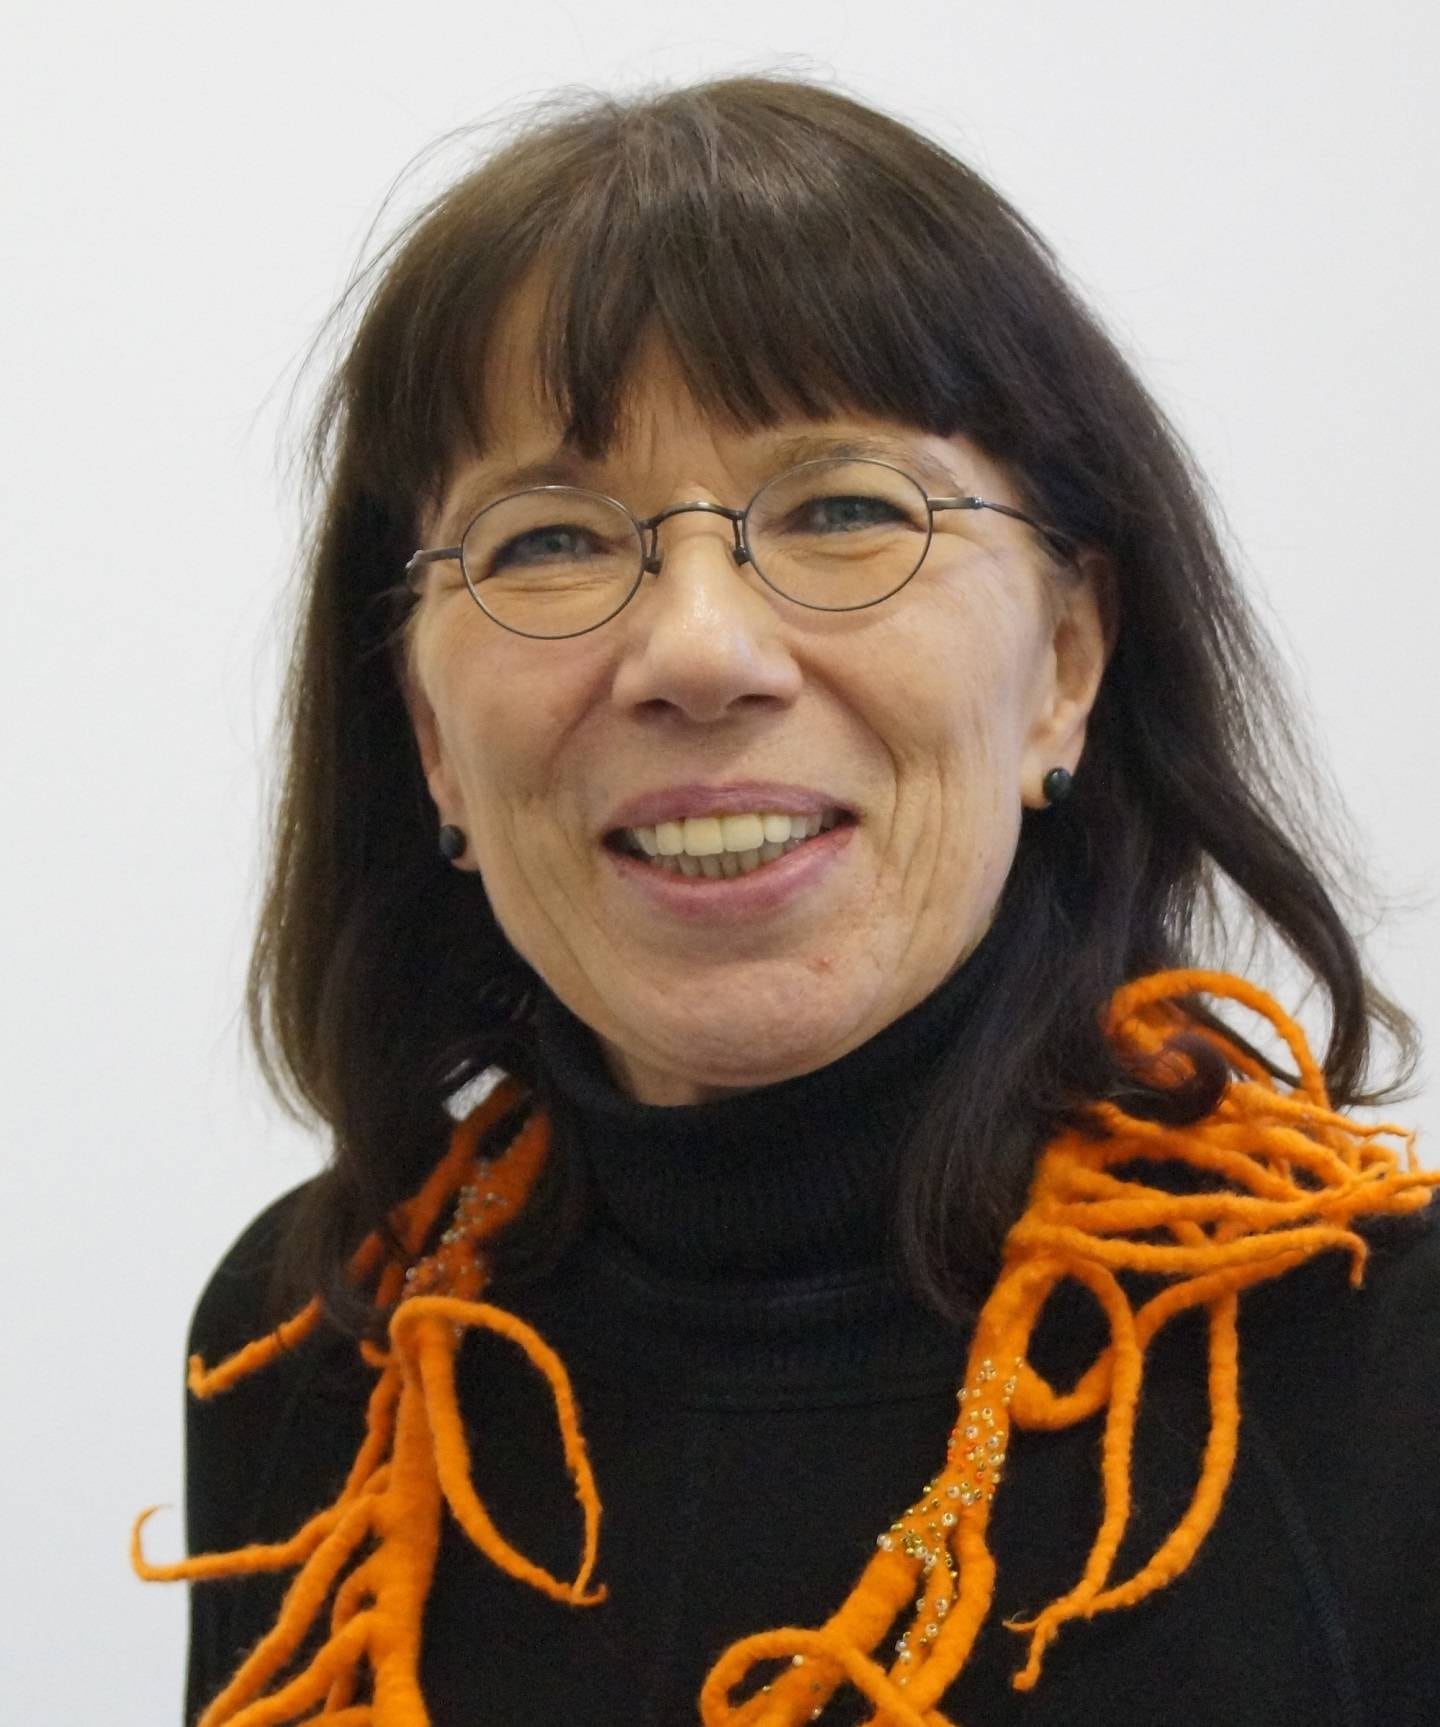 Elisabeth Tietmeyer